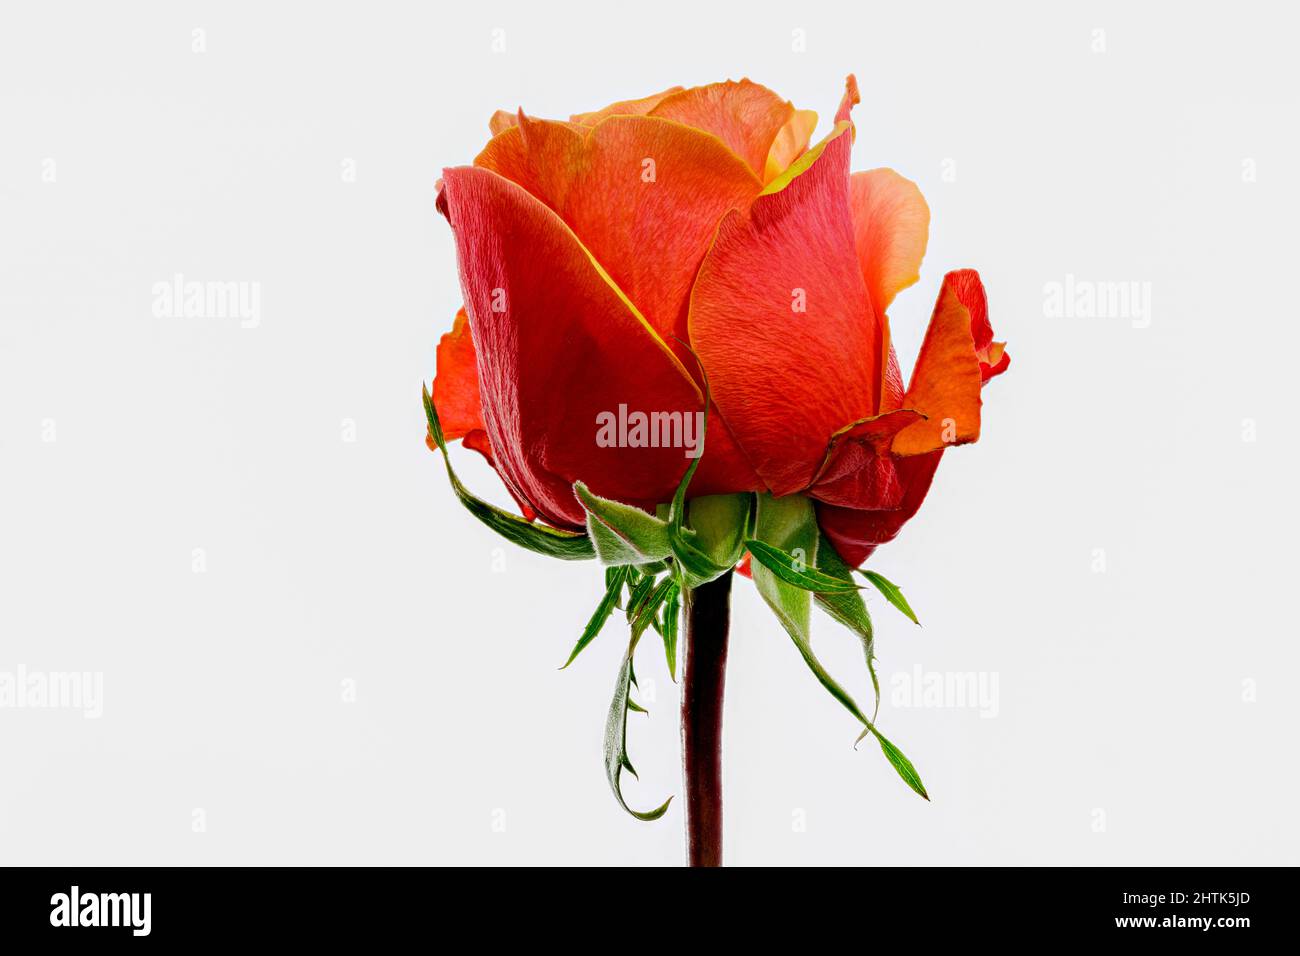 Gorgeous orange-red rose bud just bursting into flower Stock Photo